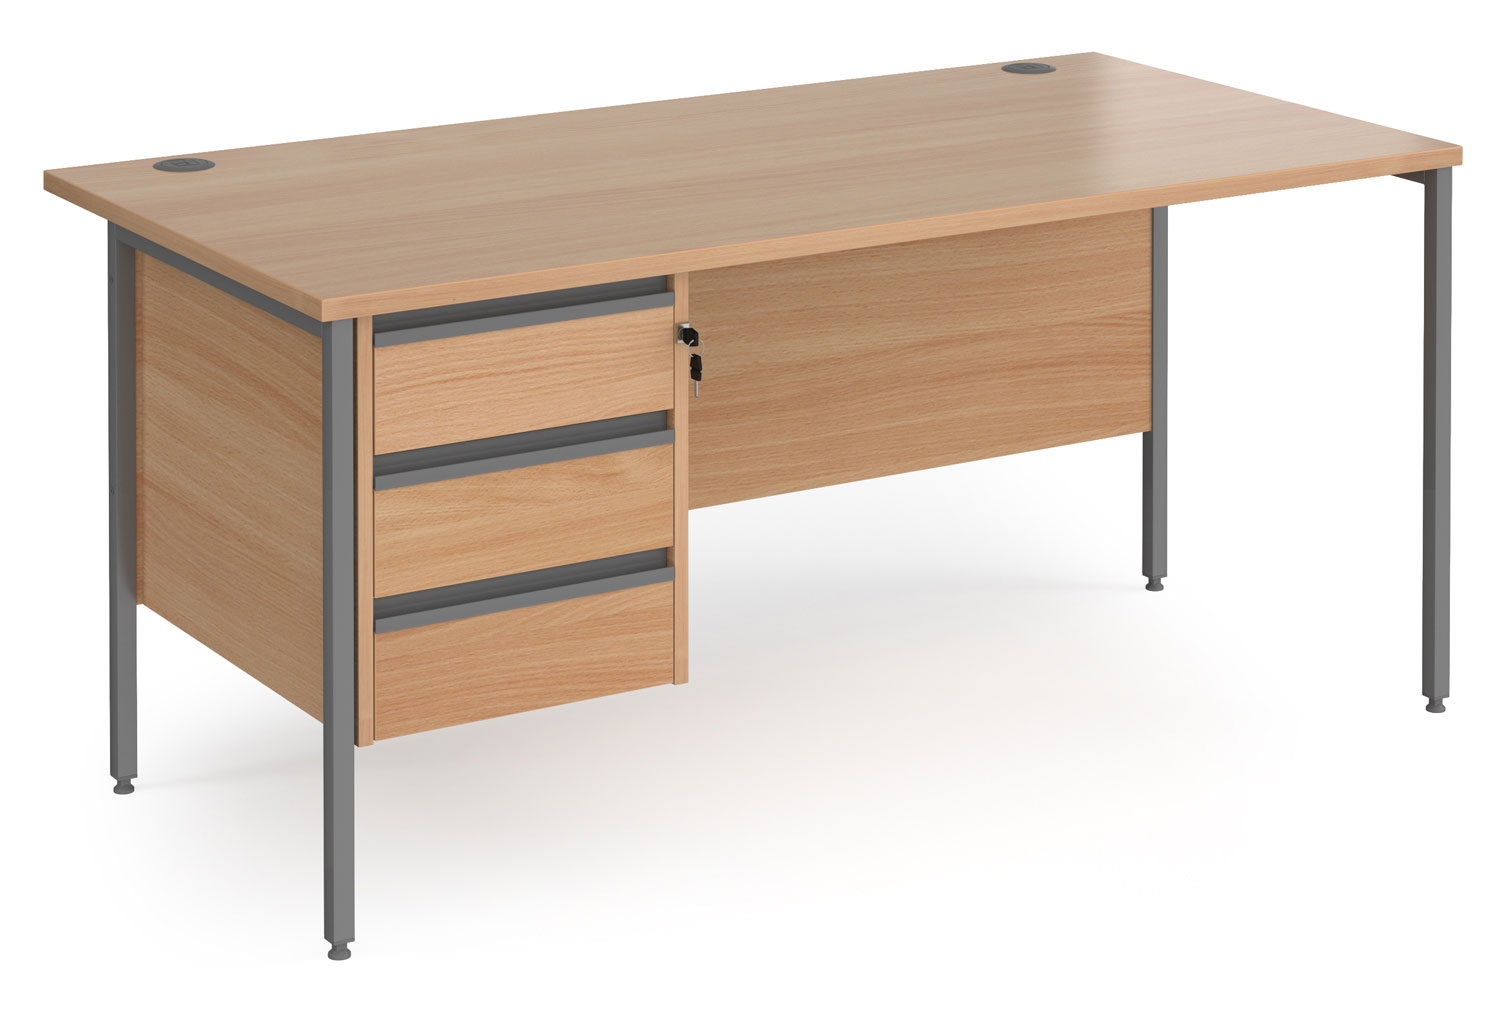 Value Line Classic+ Rectangular H-Leg Office Desk 3 Drawers (Graphite Leg), 160wx80dx73h (cm), Beech, Express Delivery